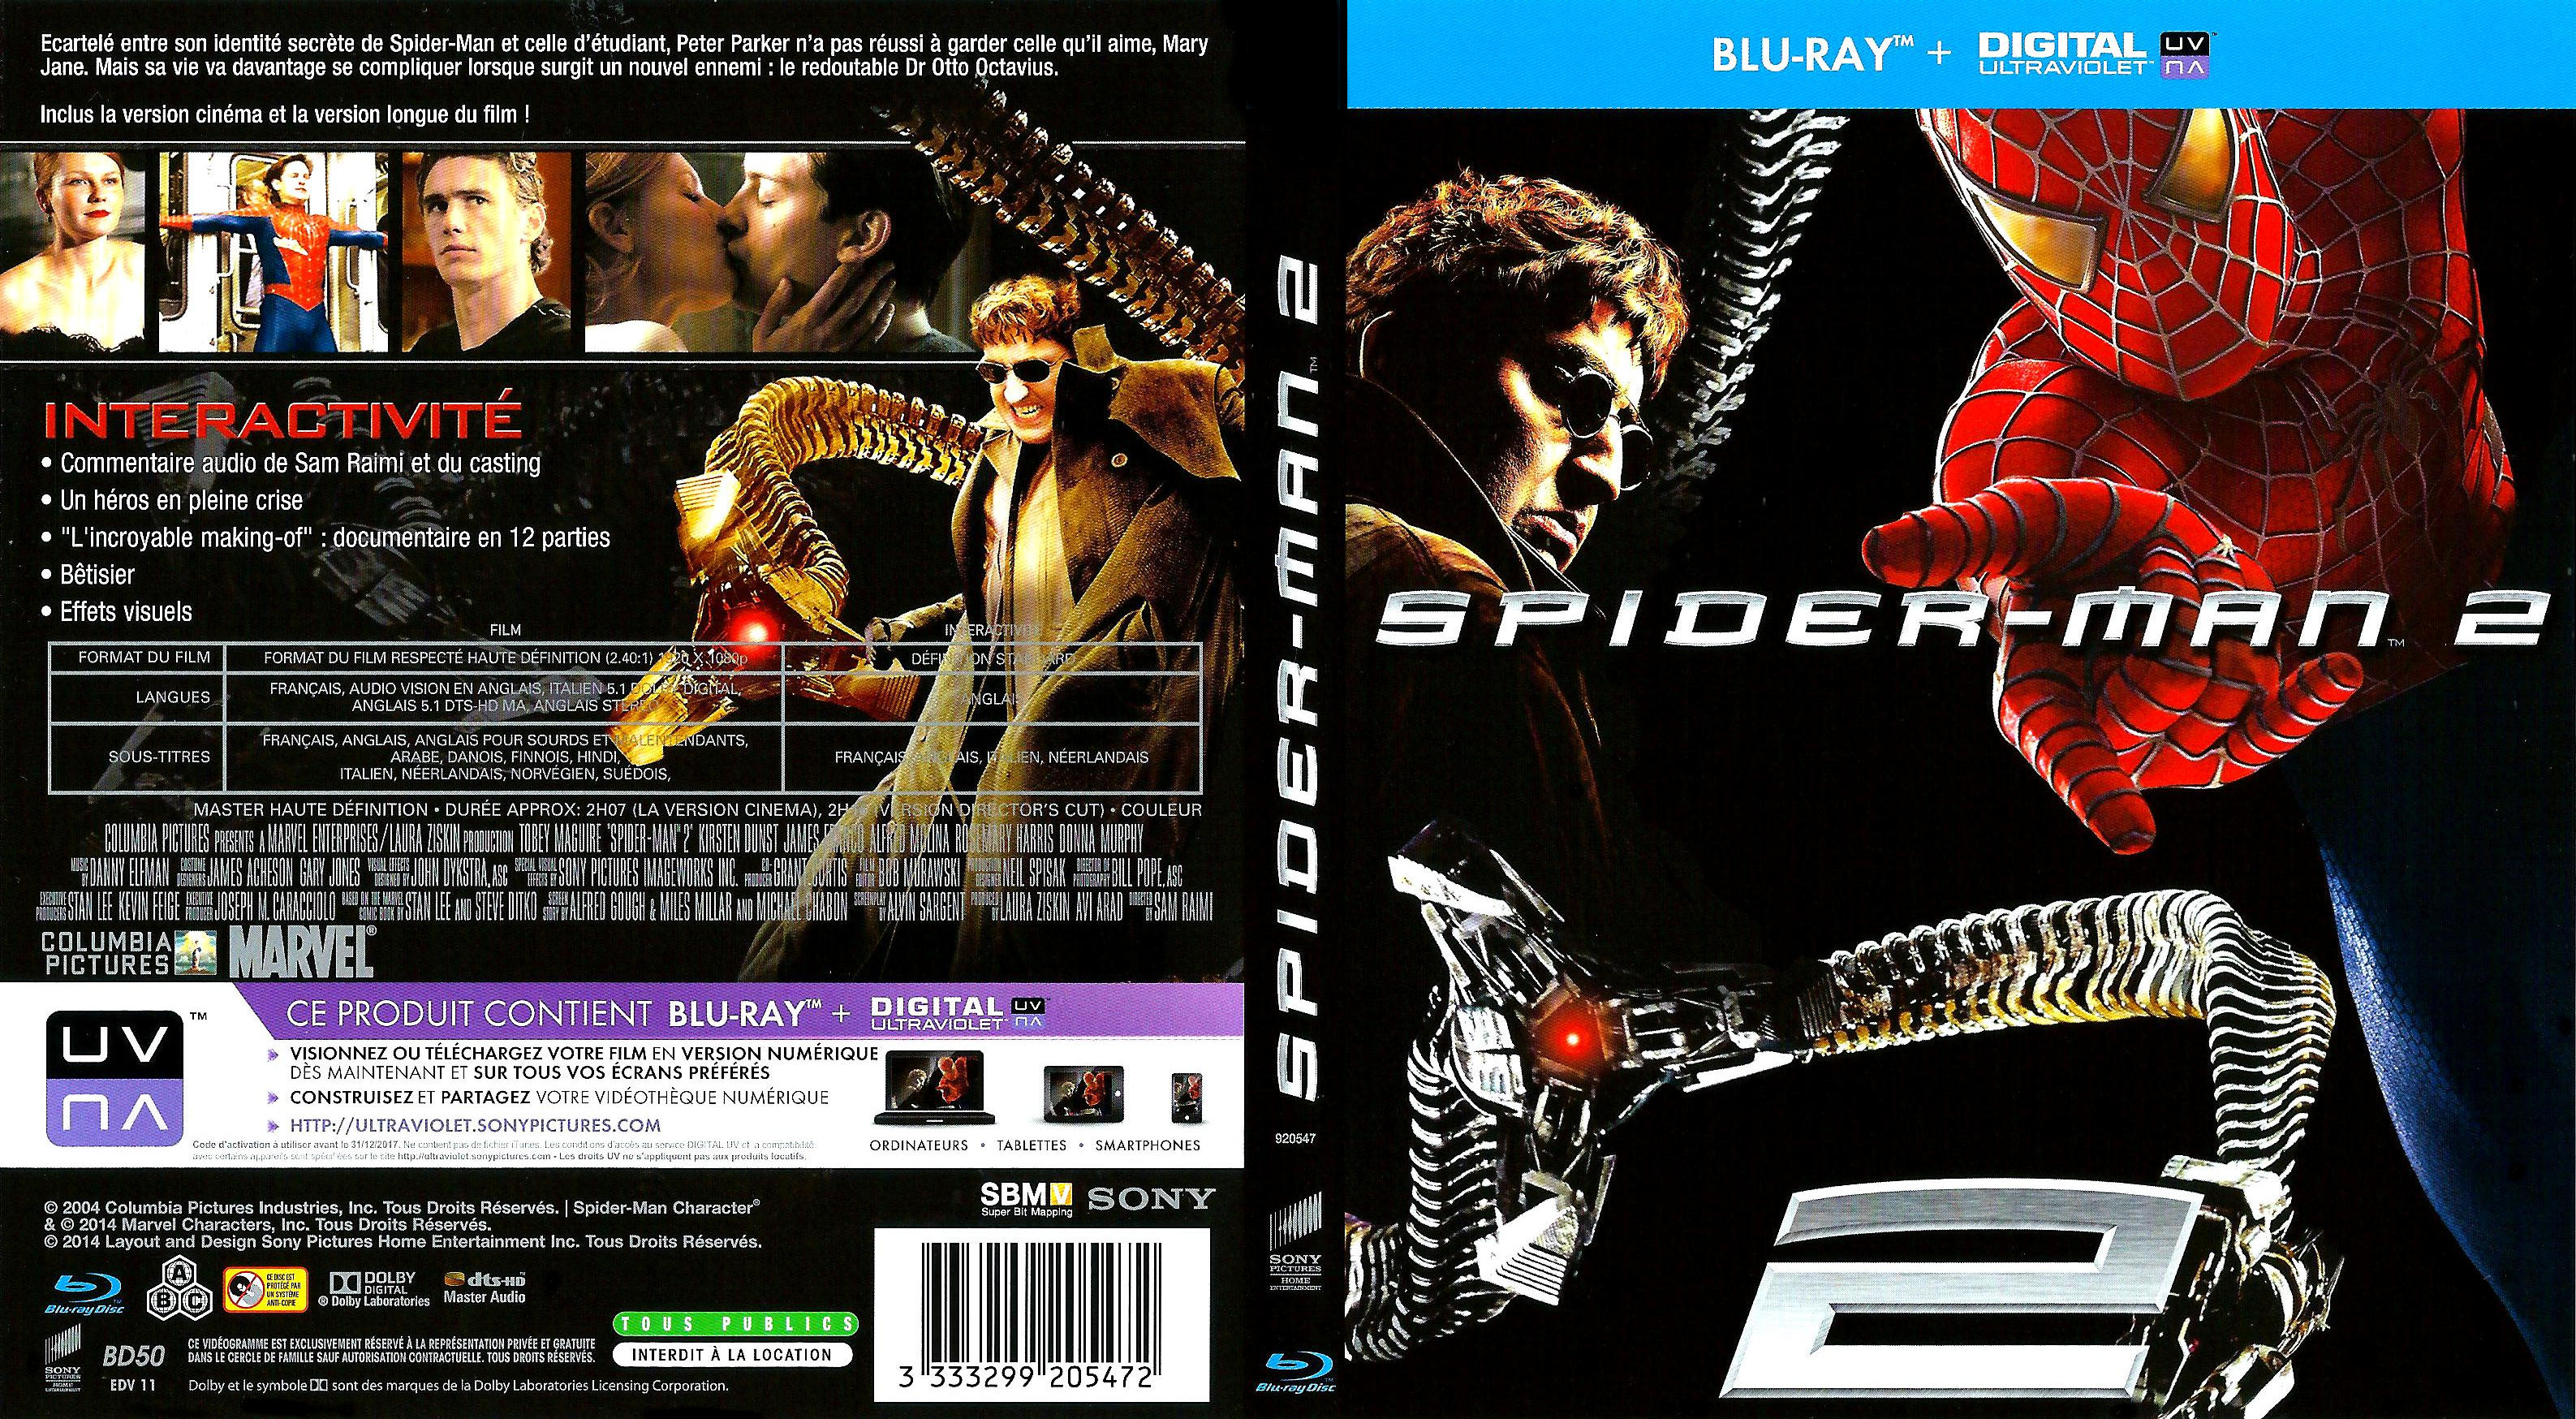 Jaquette DVD Spiderman 2 (BLU-RAY) v3